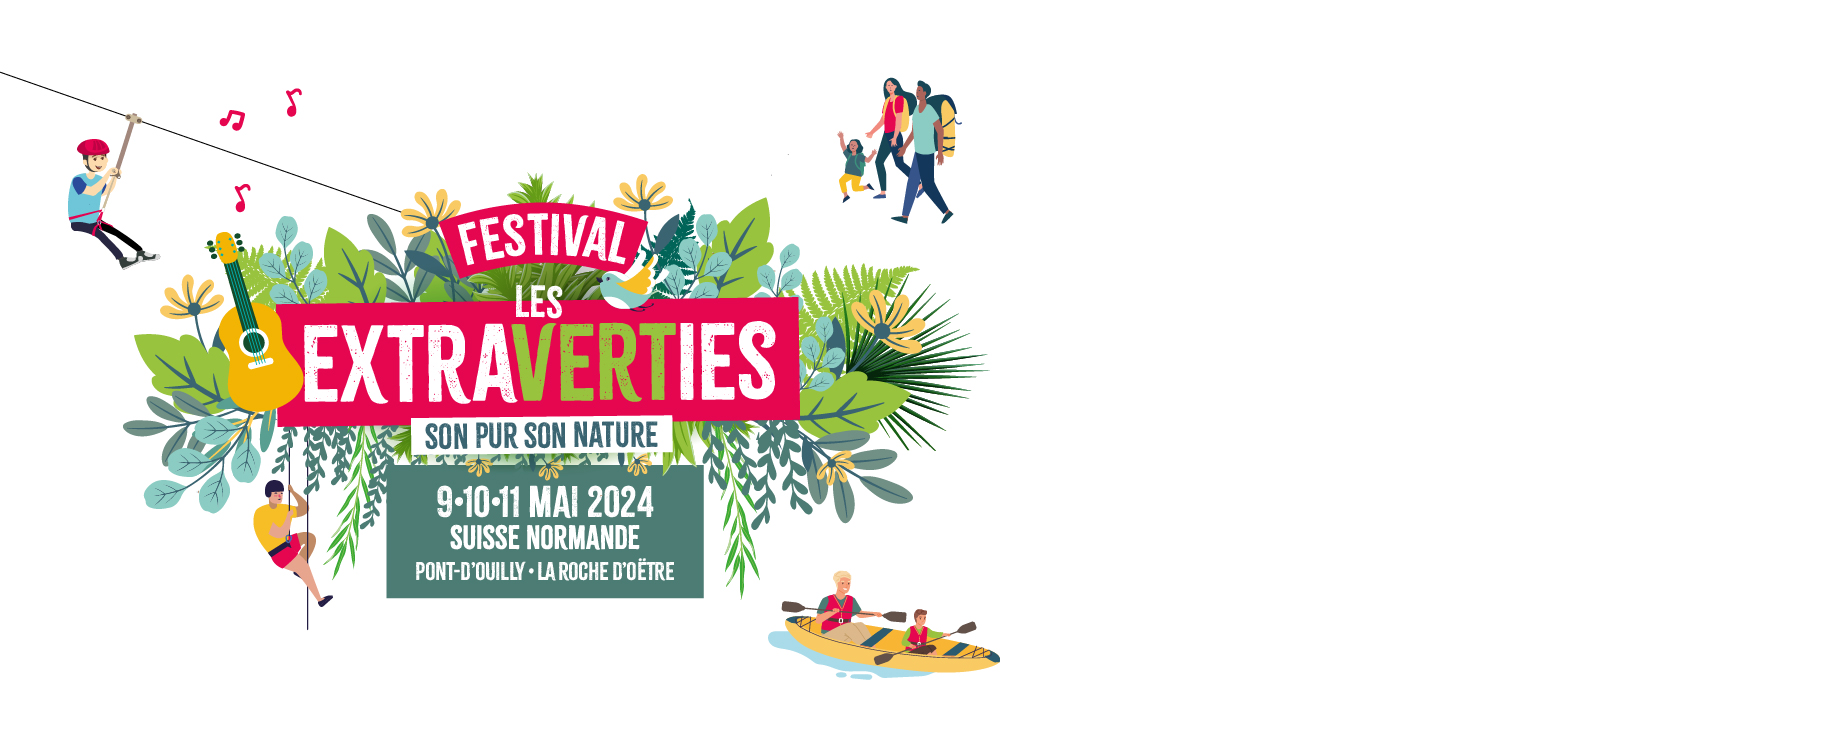 Les ExtraVerties Festival in Suisse Normande